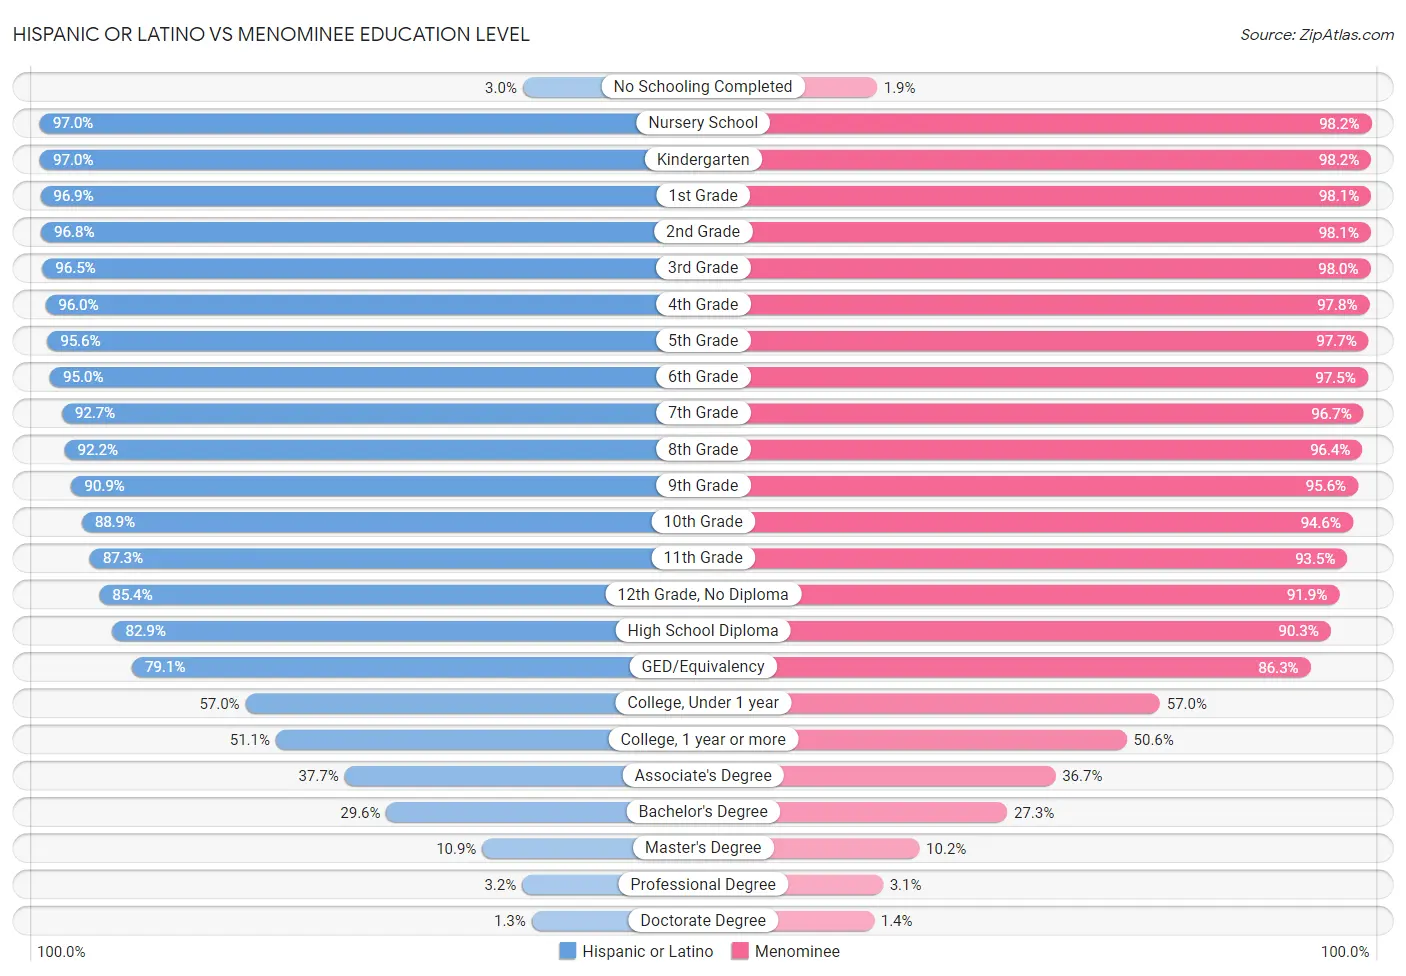 Hispanic or Latino vs Menominee Education Level